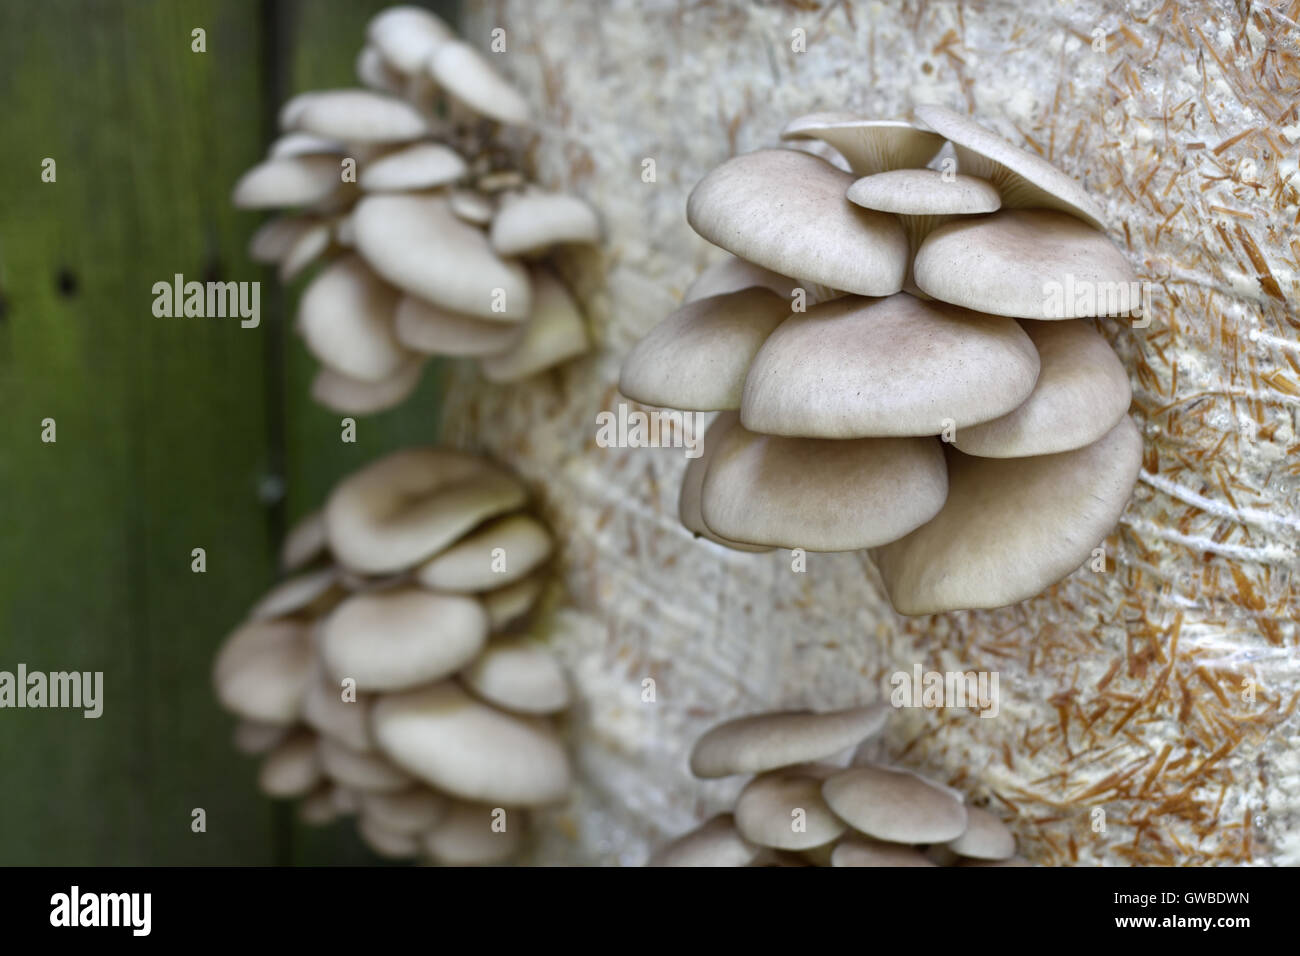 https://c8.alamy.com/comp/GWBDWN/oyster-mushrums-pleurotus-ostreatus-cultivated-on-straw-growing-mushrooms-GWBDWN.jpg